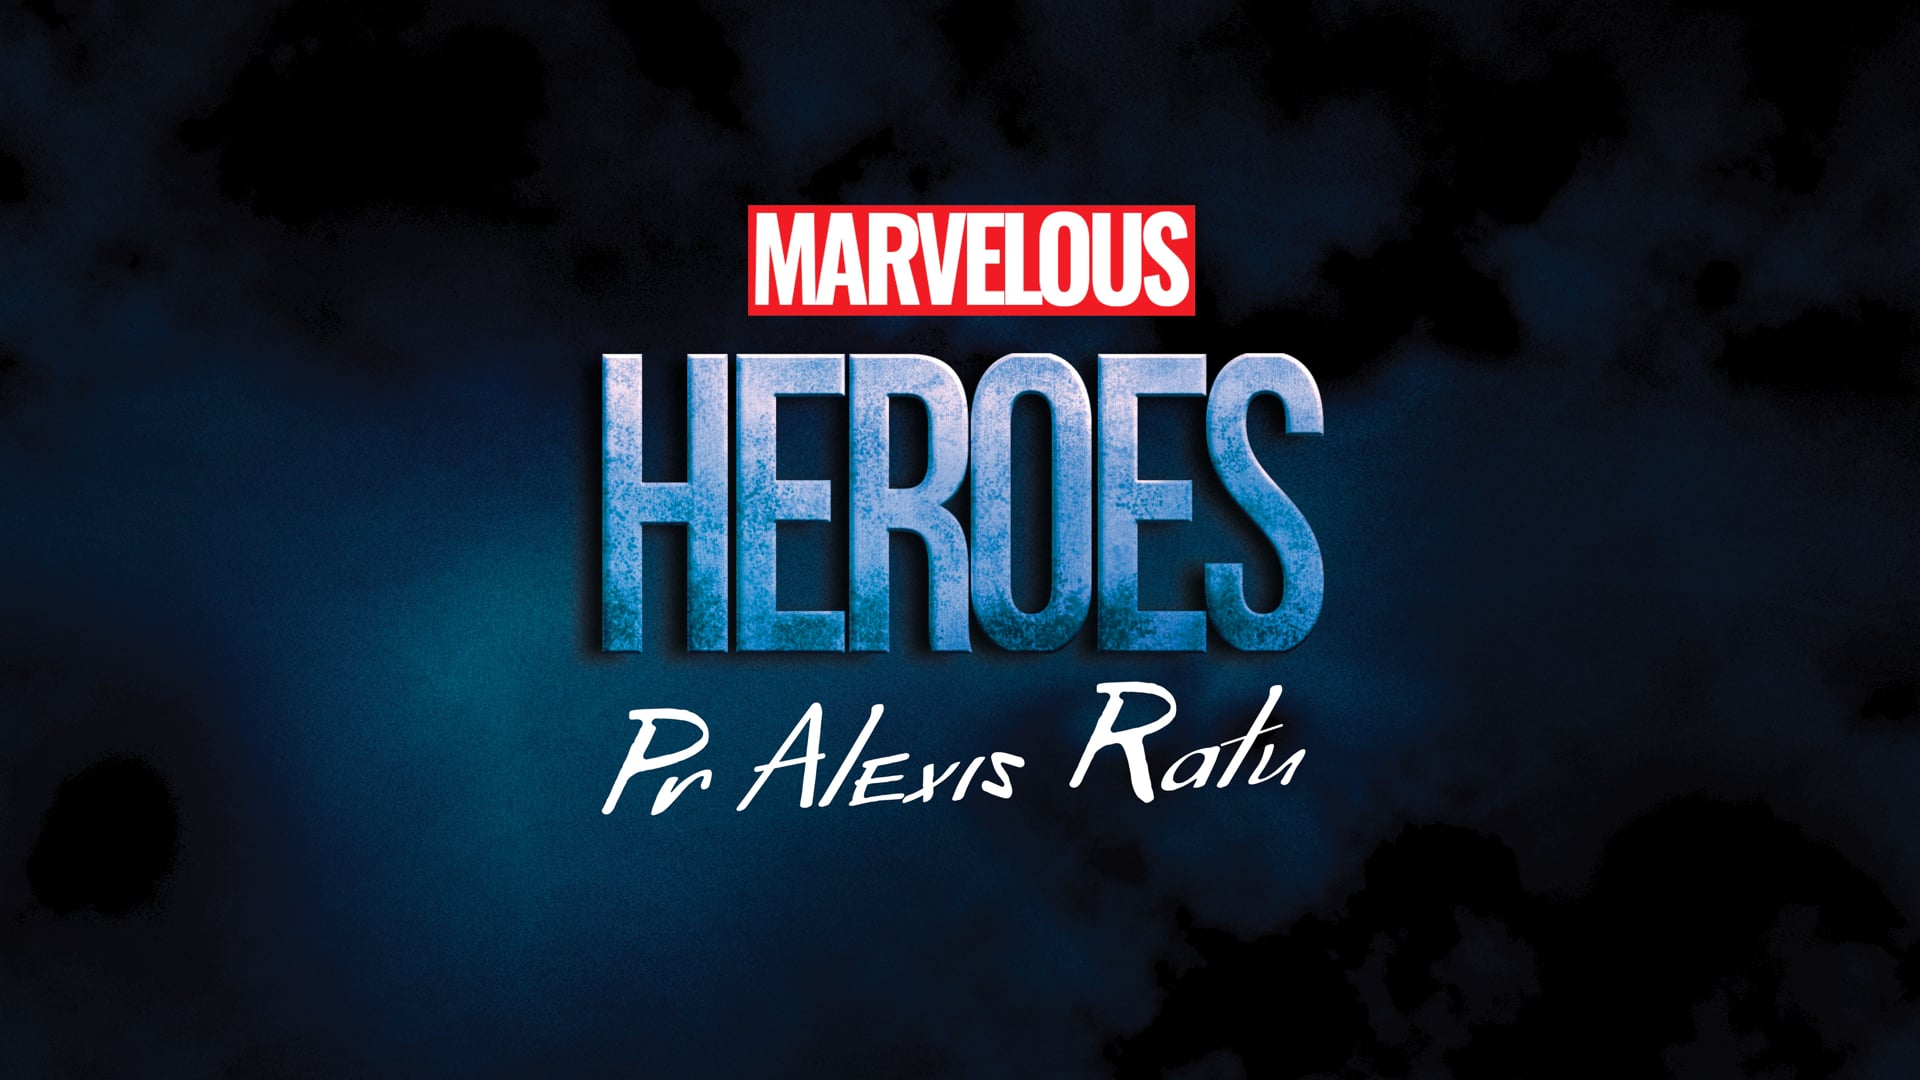 Marvellous Heroes, Pt. 1 // “Wonder Woman” (Alexis Ratu)